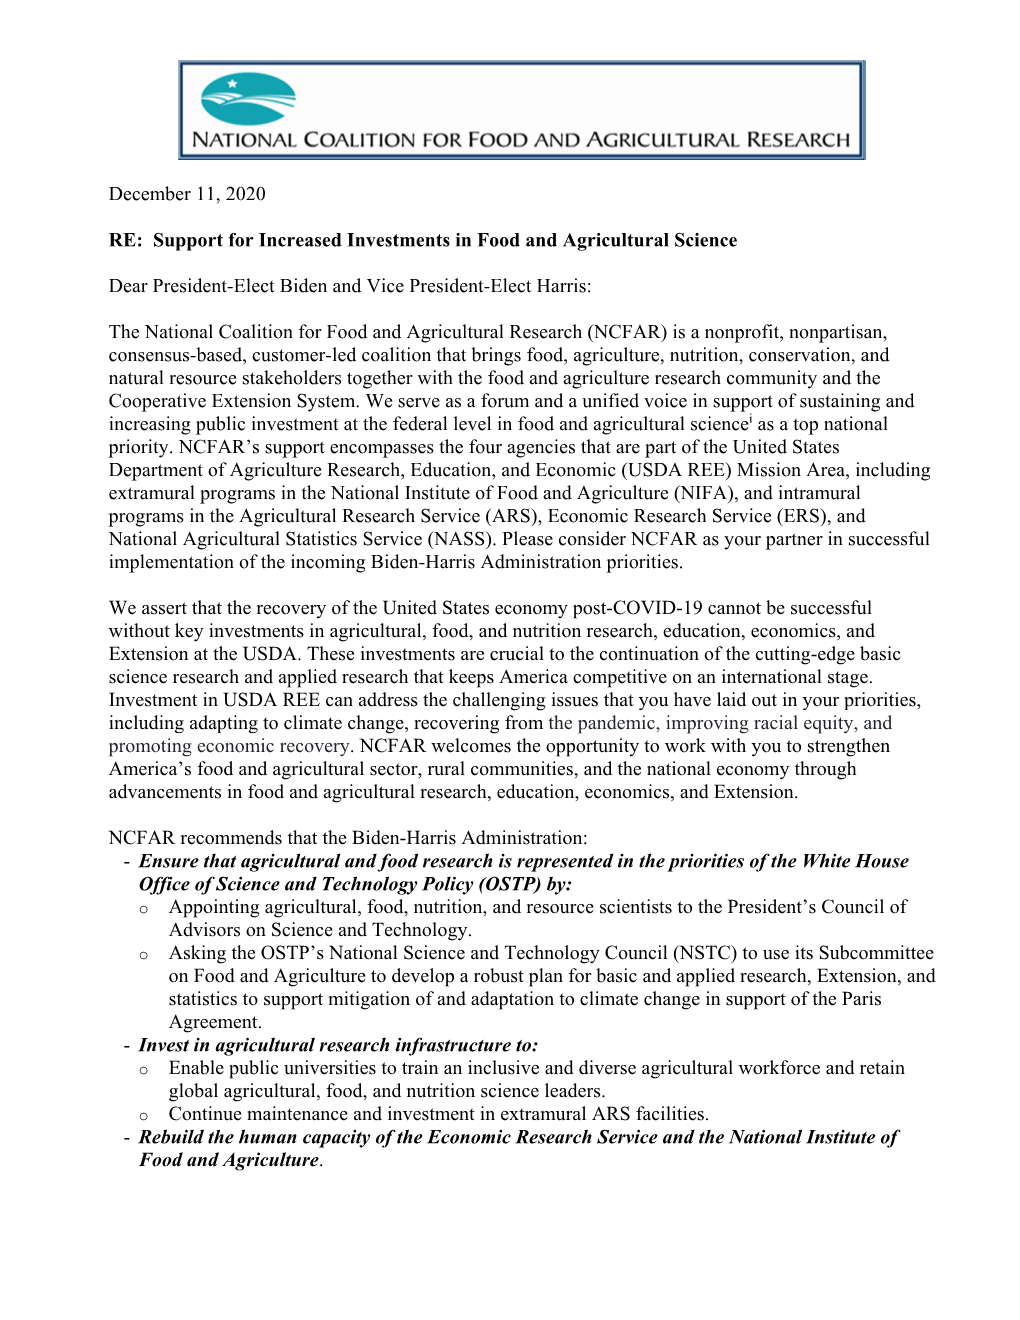 NCFAR Letter to Biden Transition Team 2020